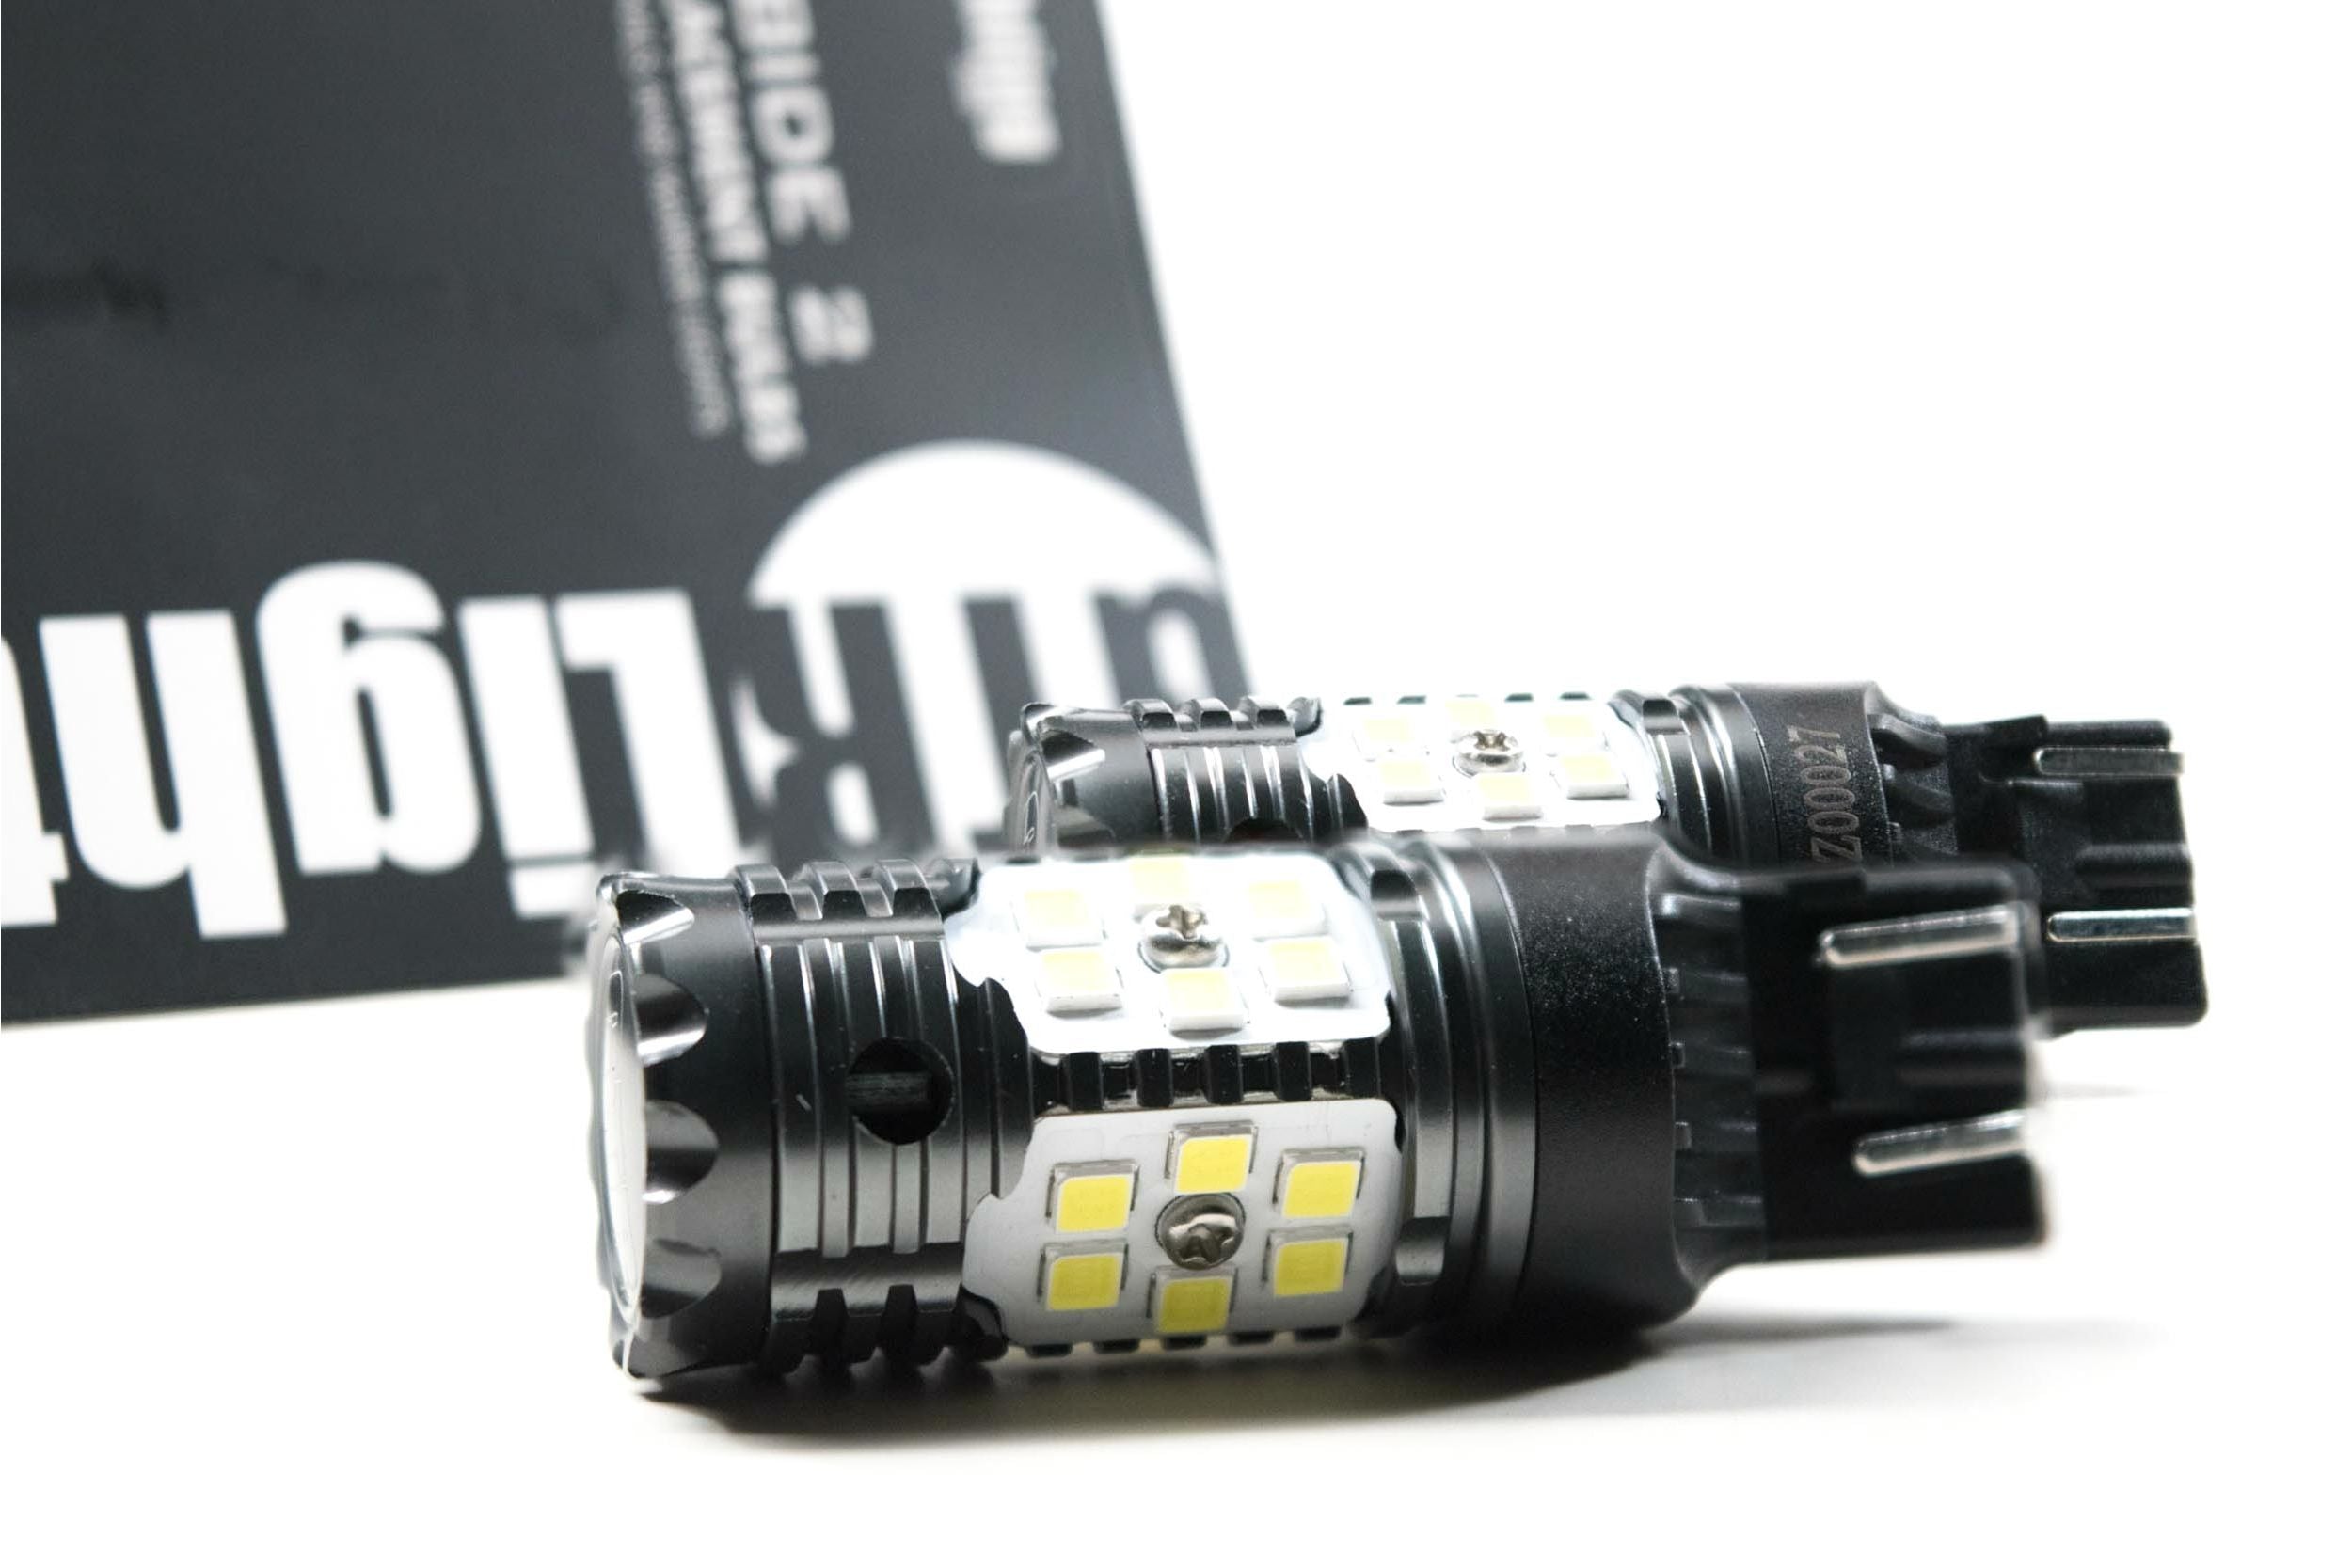 7440/7443: GTR Lighting Carbide Canbus 2.0 LED Bulbs-